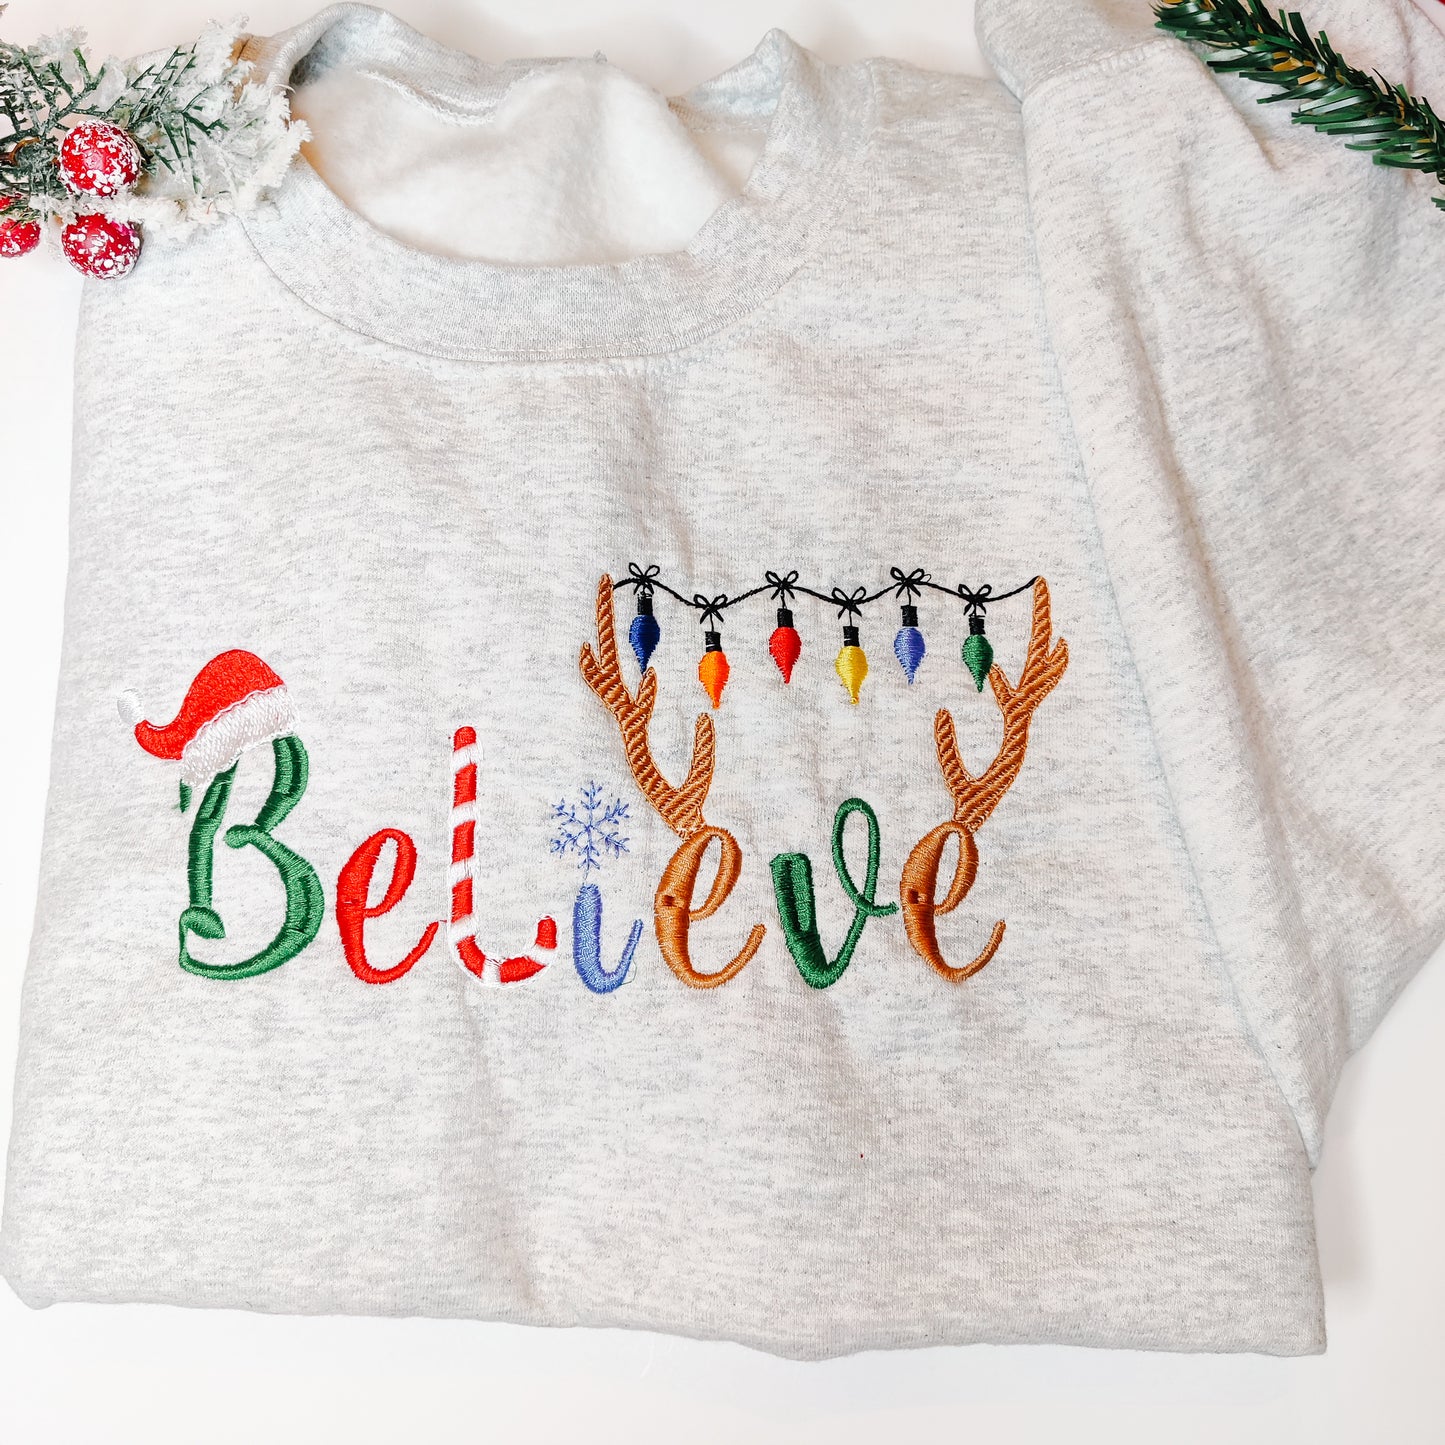 Believe Embroidered Sweatshirt